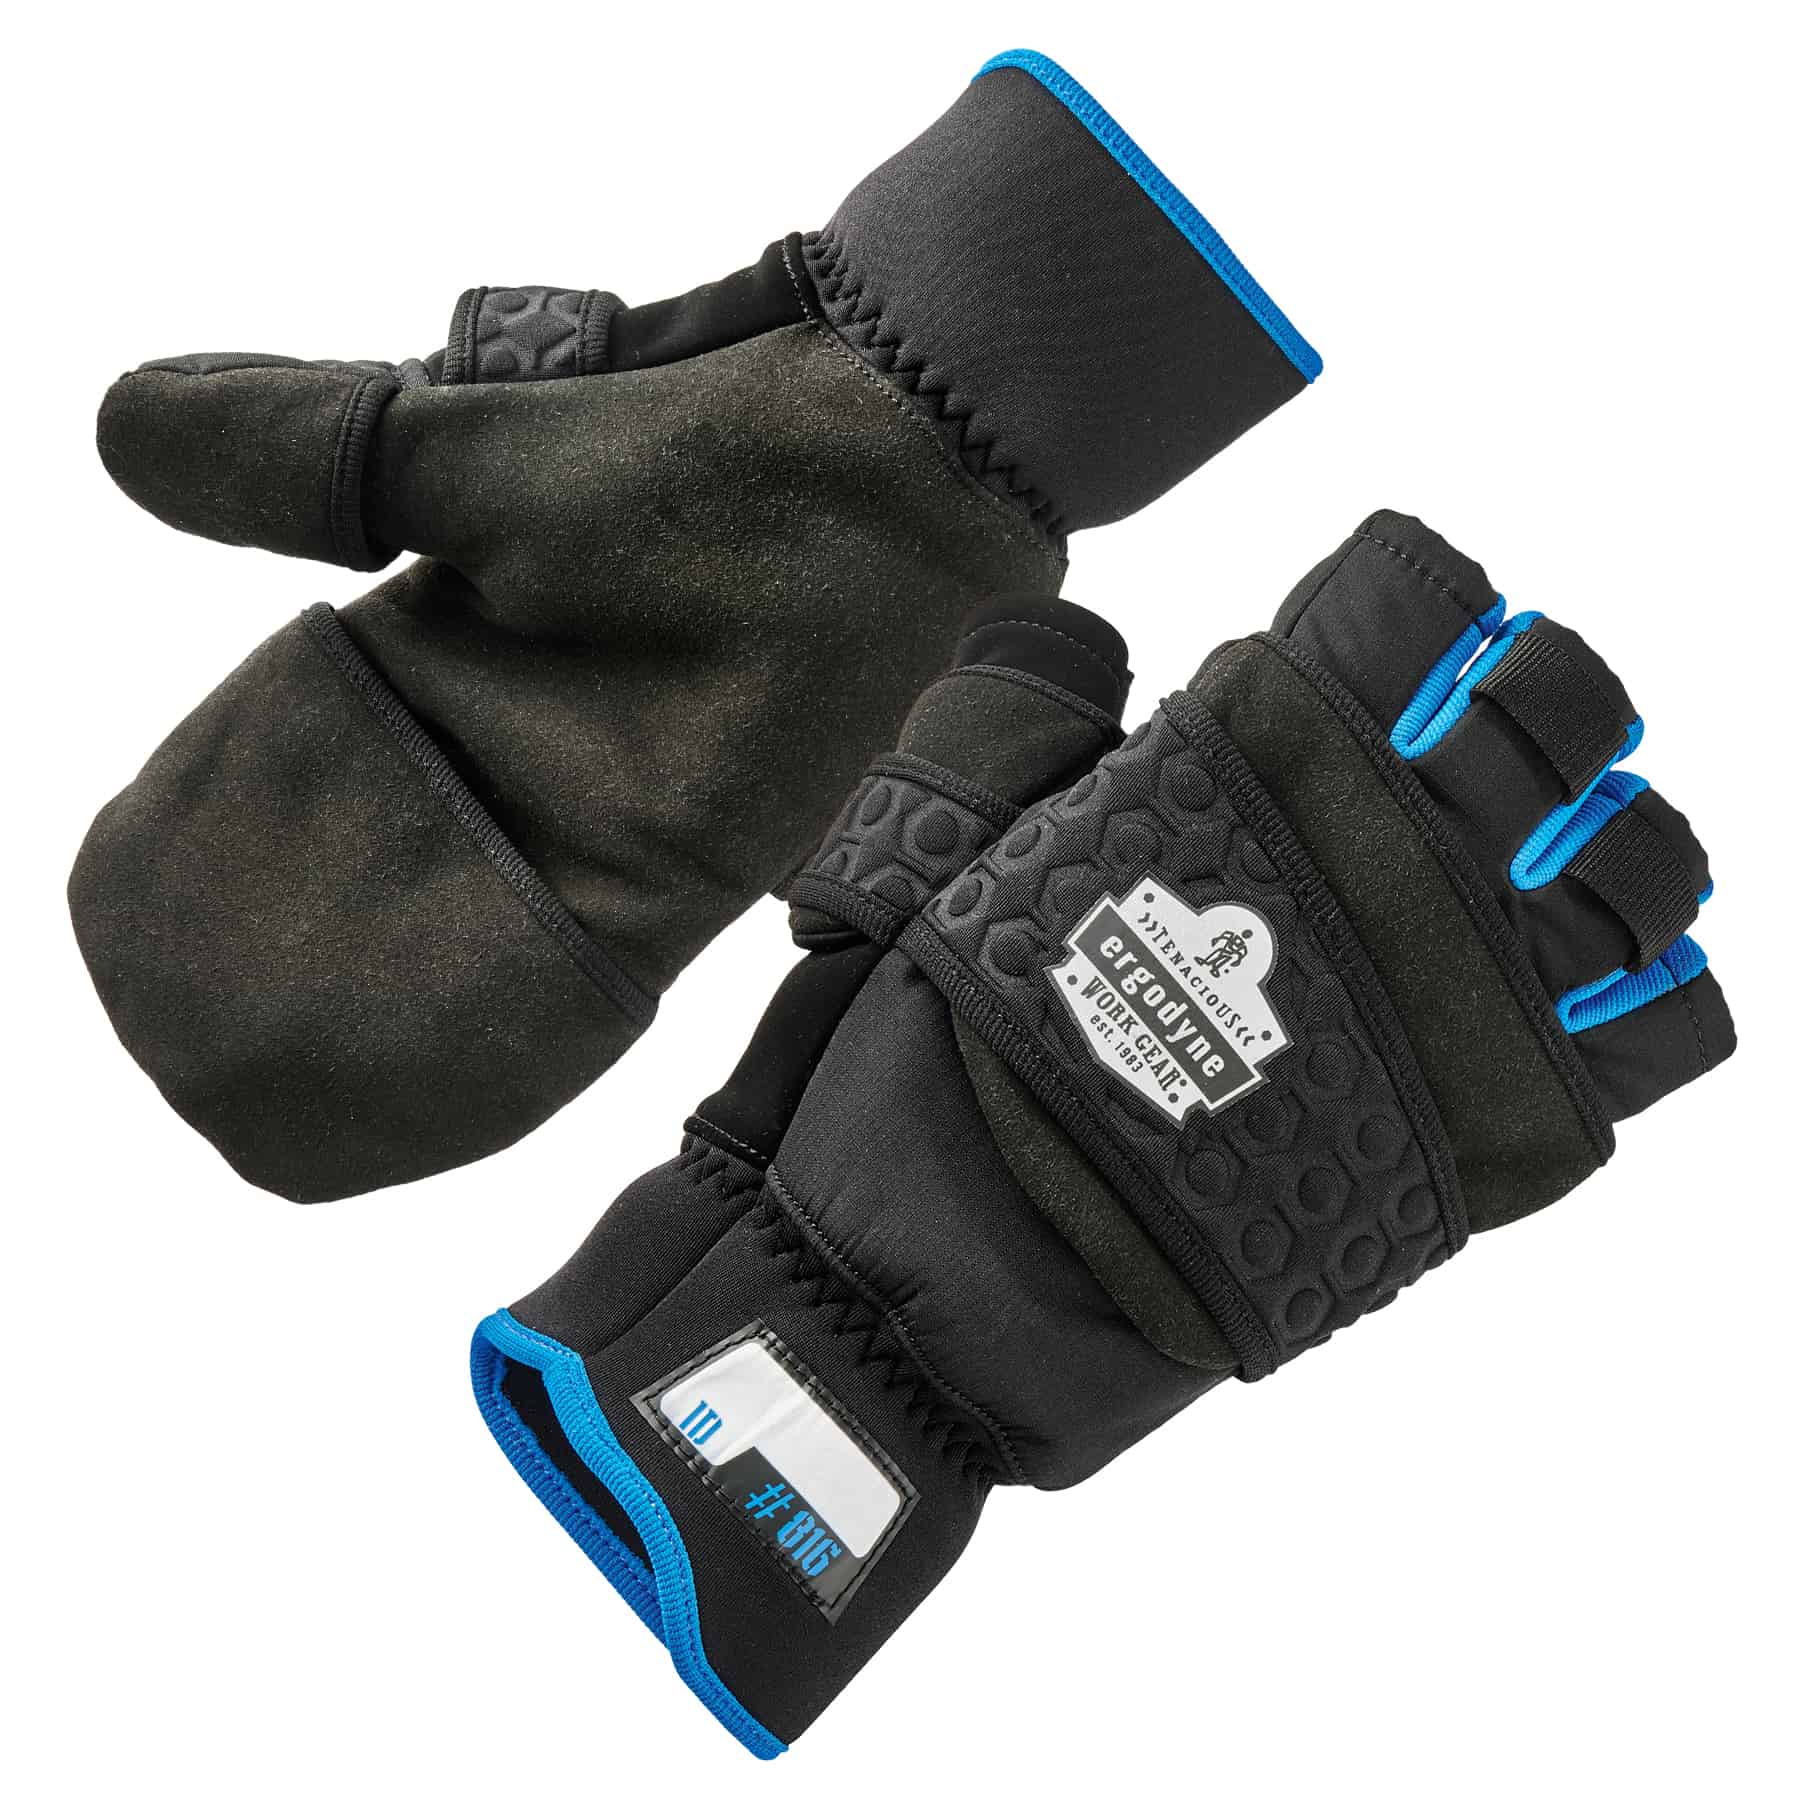 https://www.ergodyne.com/sites/default/files/product-images/17342-816-thermal-flip-top-gloves-paired.jpg